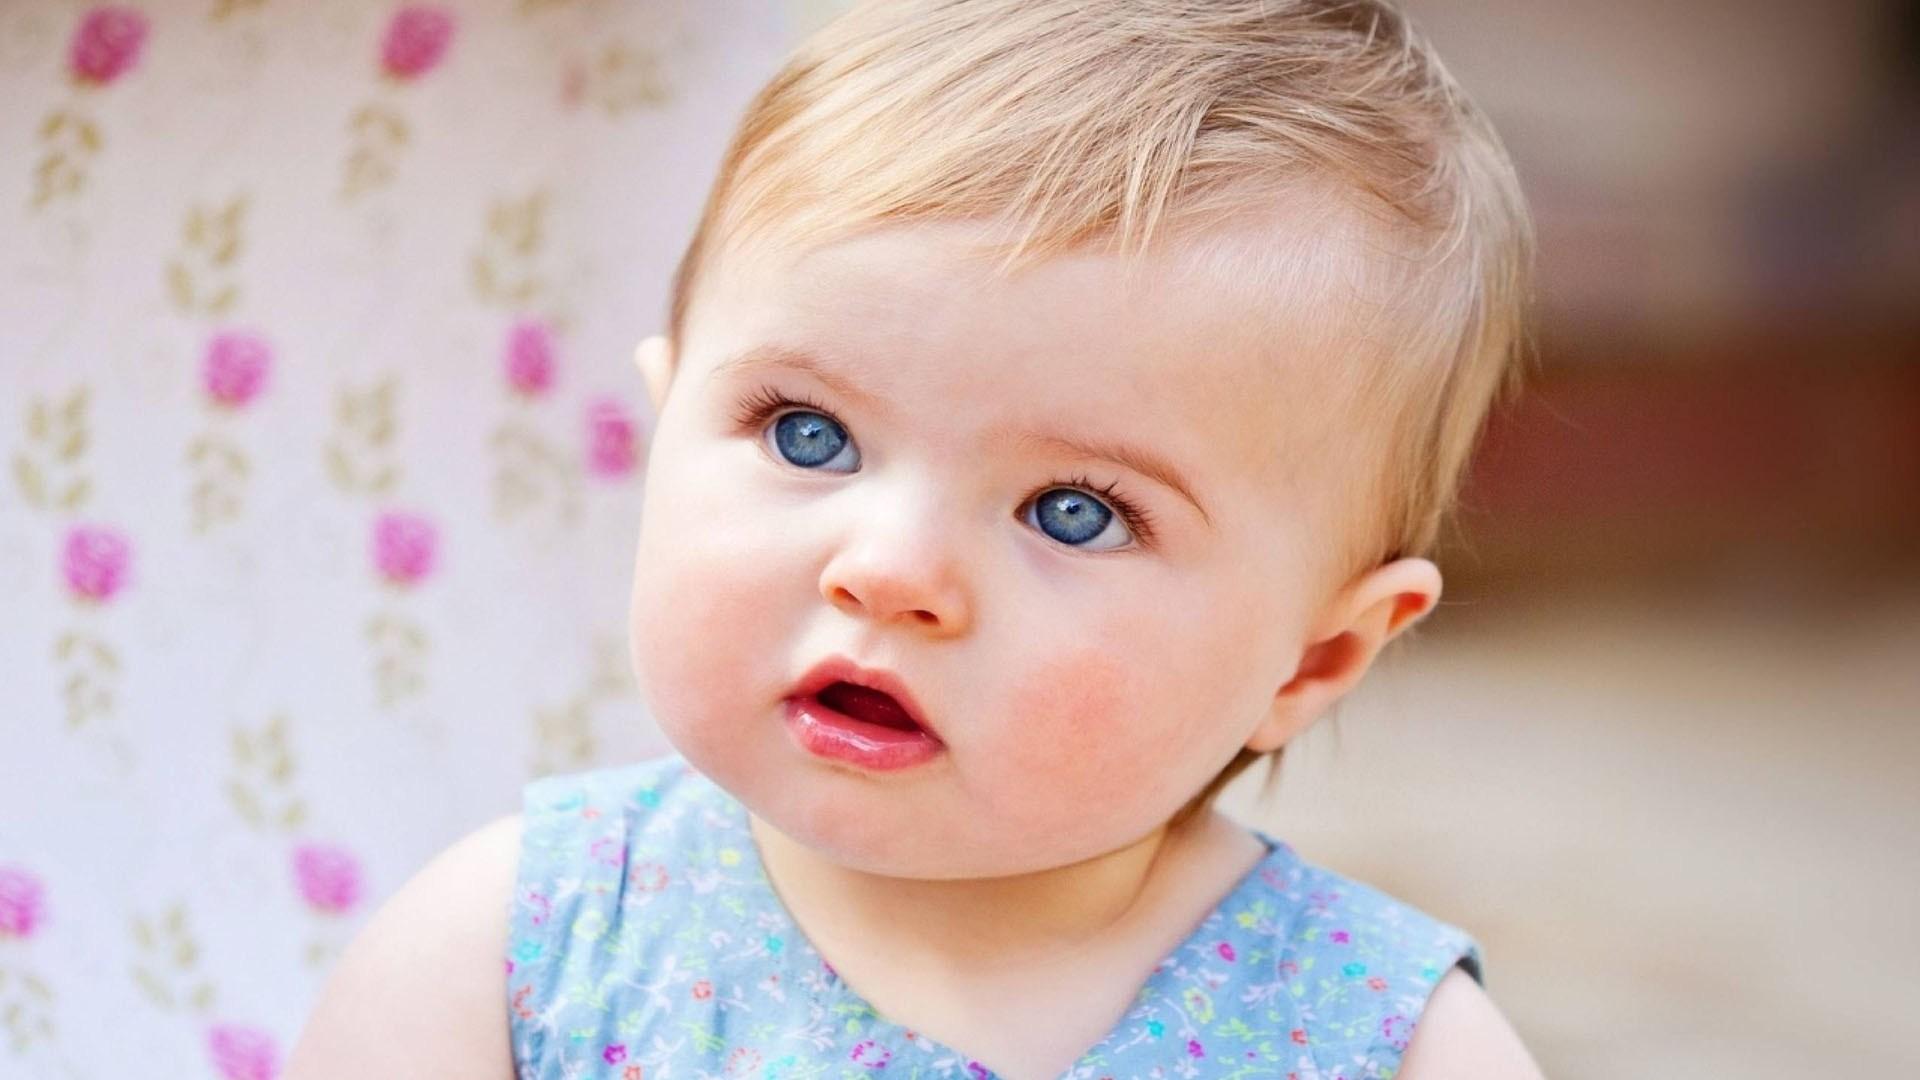 Cute Baby HD Image, Pics & Wallpaper 2018. Cute Profile